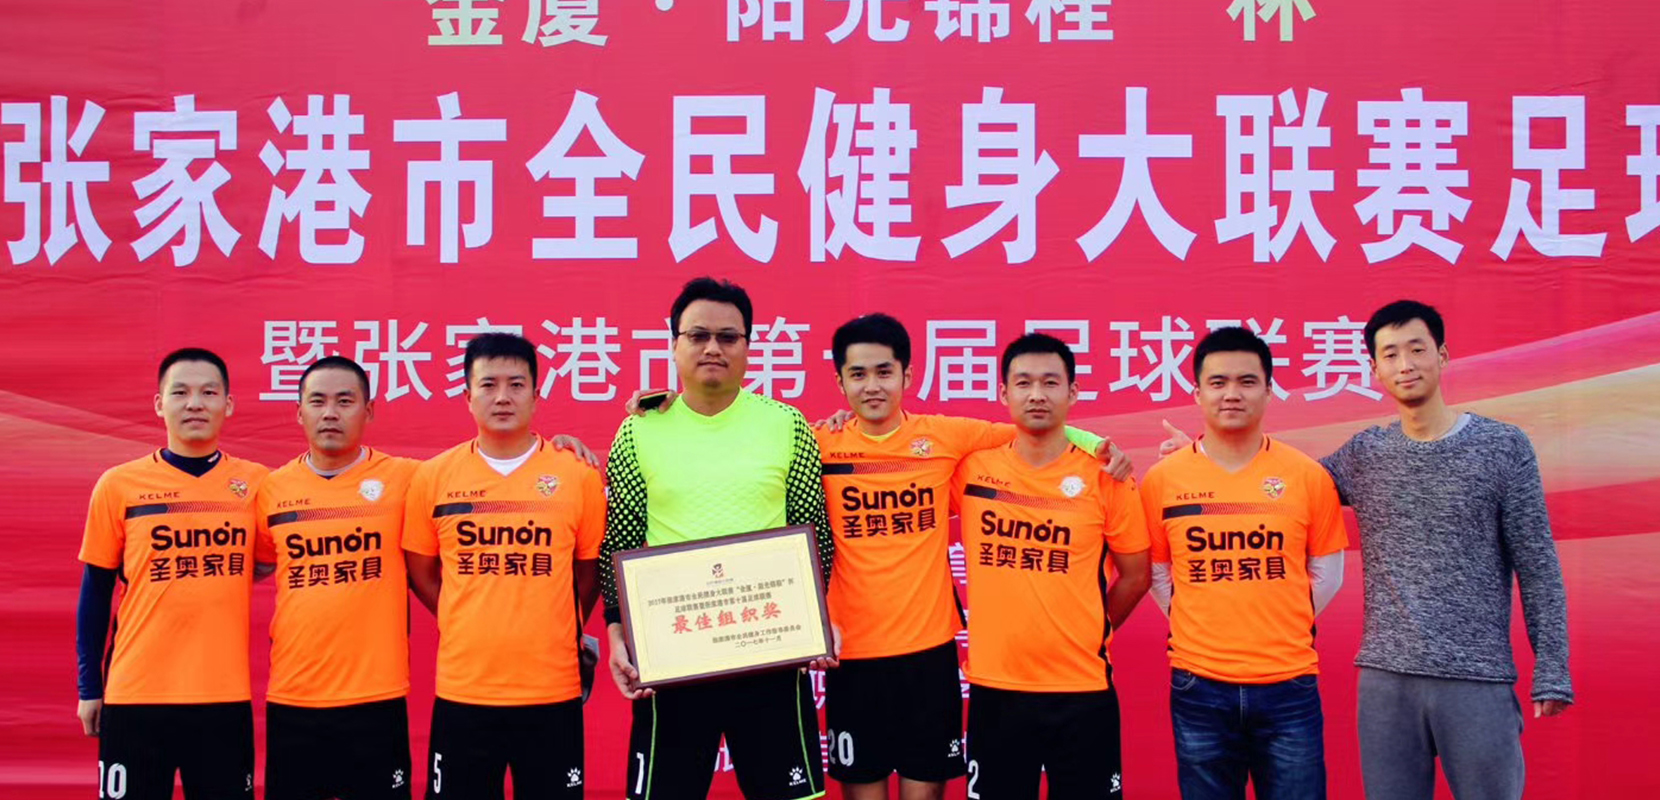 STM Football Team Won The Prize For The Best Organizer 正能机械 足球队获得最佳组织奖